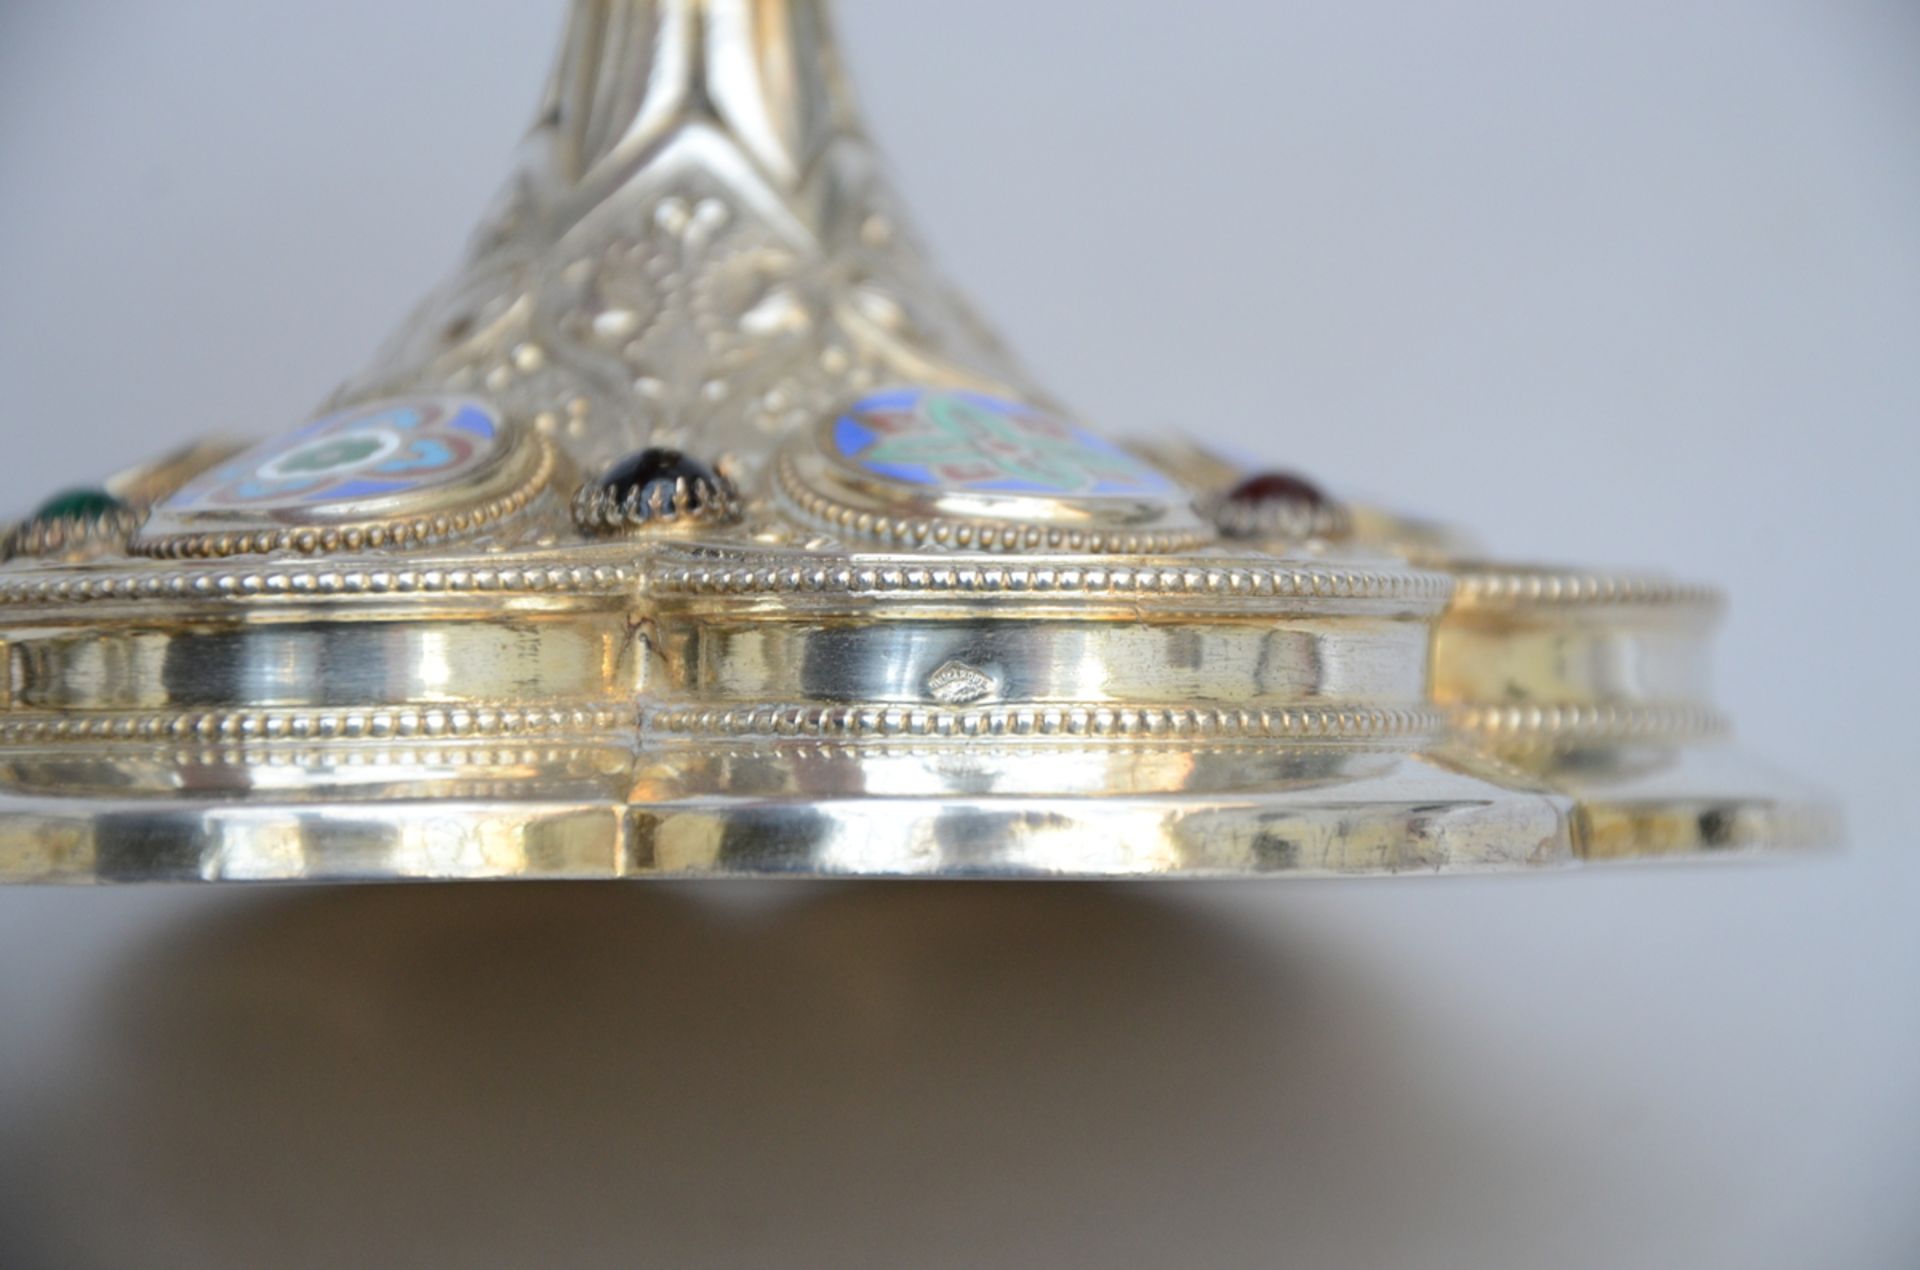 Gothic revival ciborium in silver with enamel and stones (31 cm) - Image 4 of 6